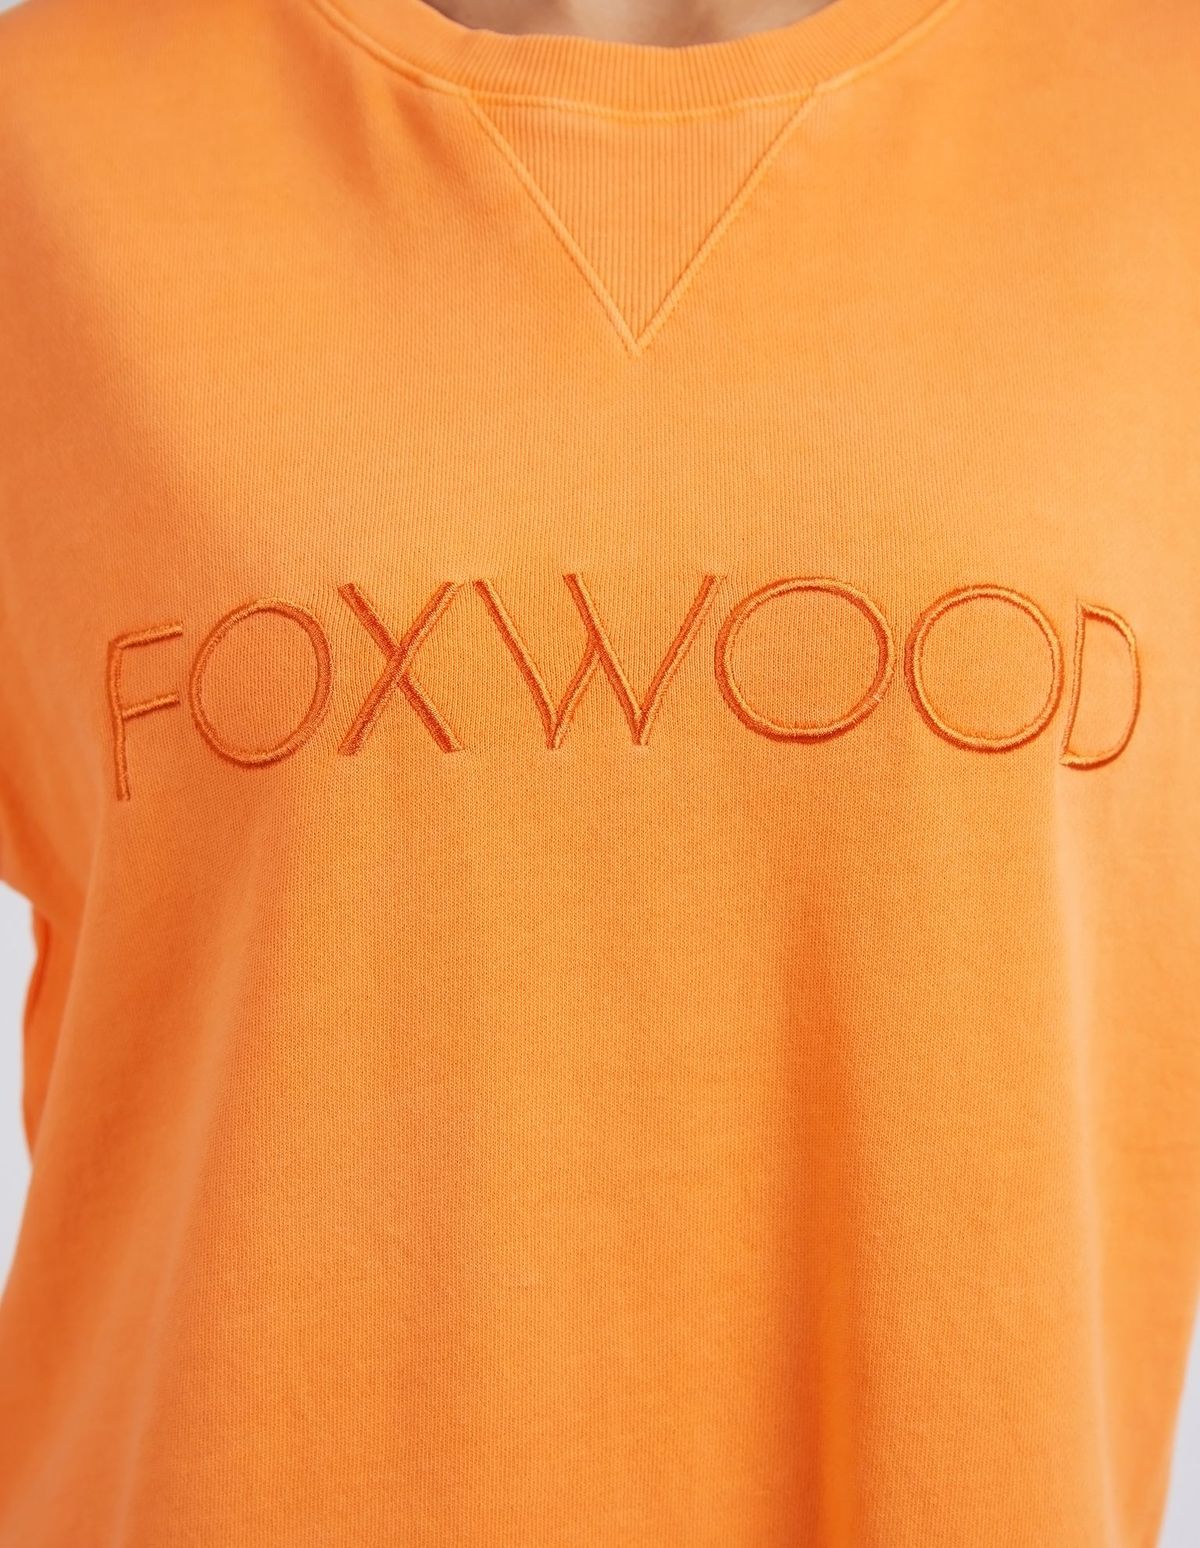 Foxwood Simplified Crew [COLOUR:Orange SIZE:6]